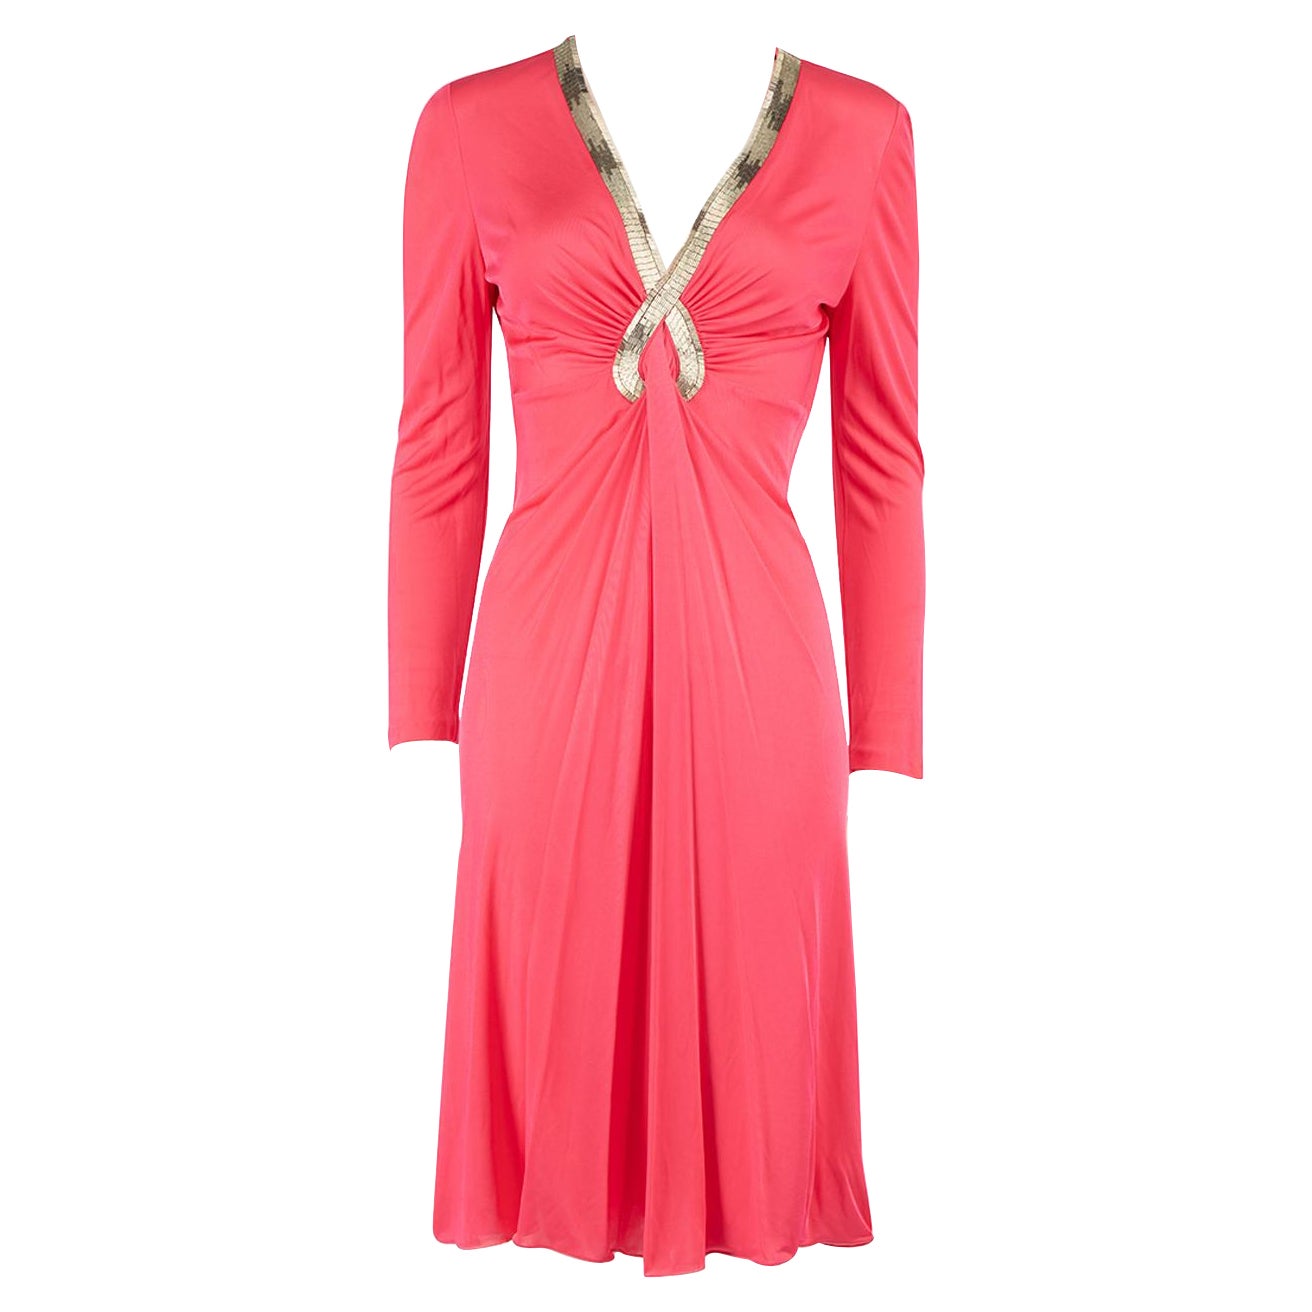 Emilio Pucci Pink Long Sleeve Embellished Dress Size L